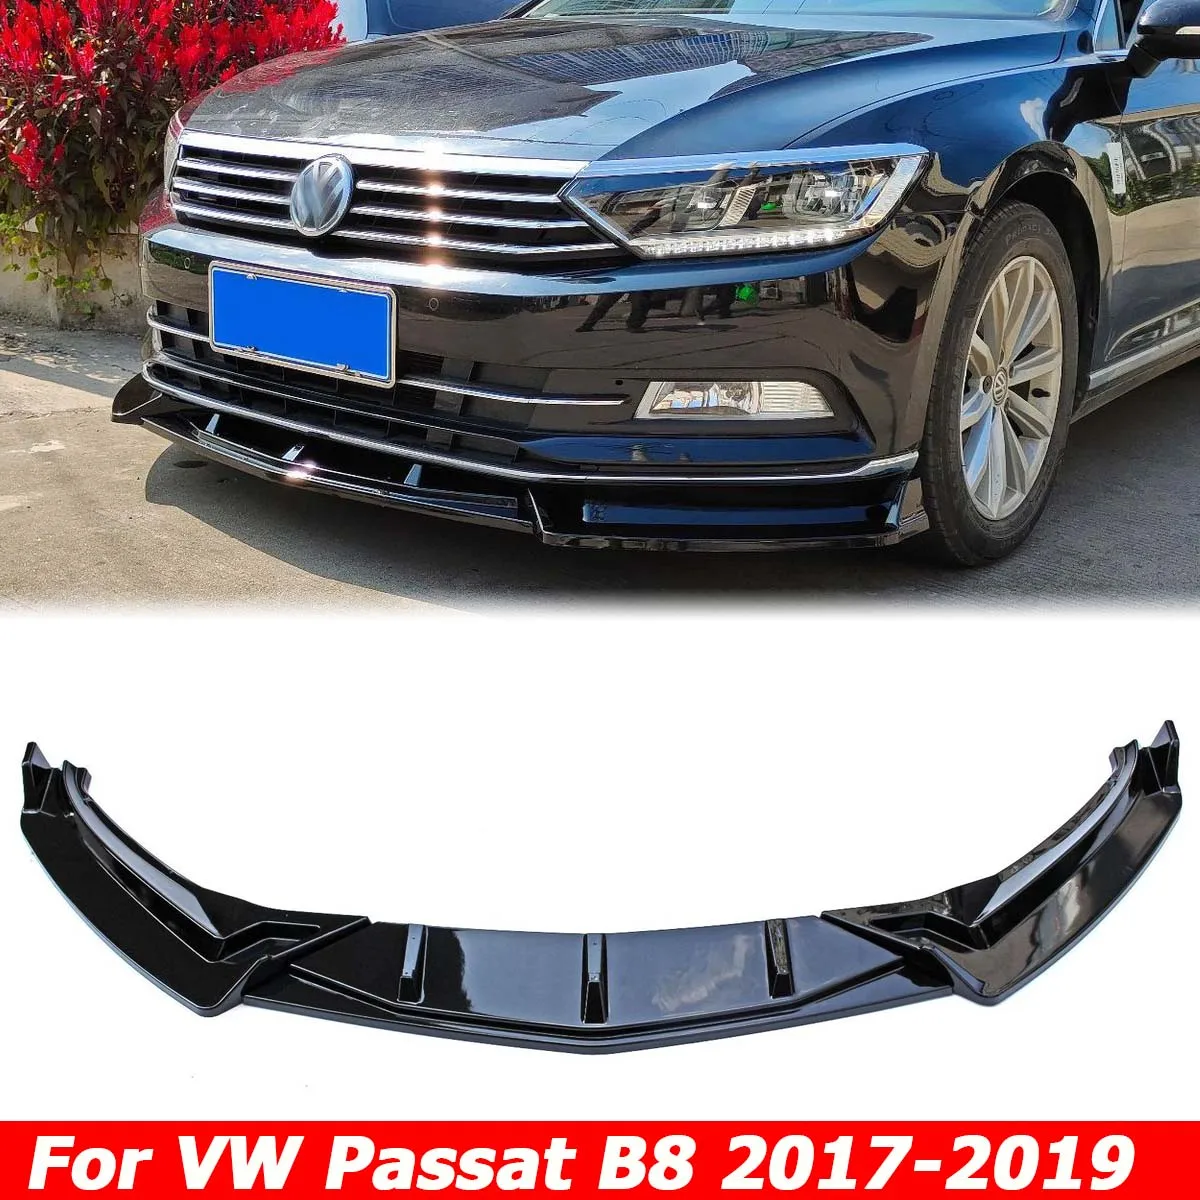 

For Volkswagen VW Passat B8 2017-2019 Front Bumper Lip Lower Side Spoiler Splitters Body Kit Guards Deflector Car Accessories